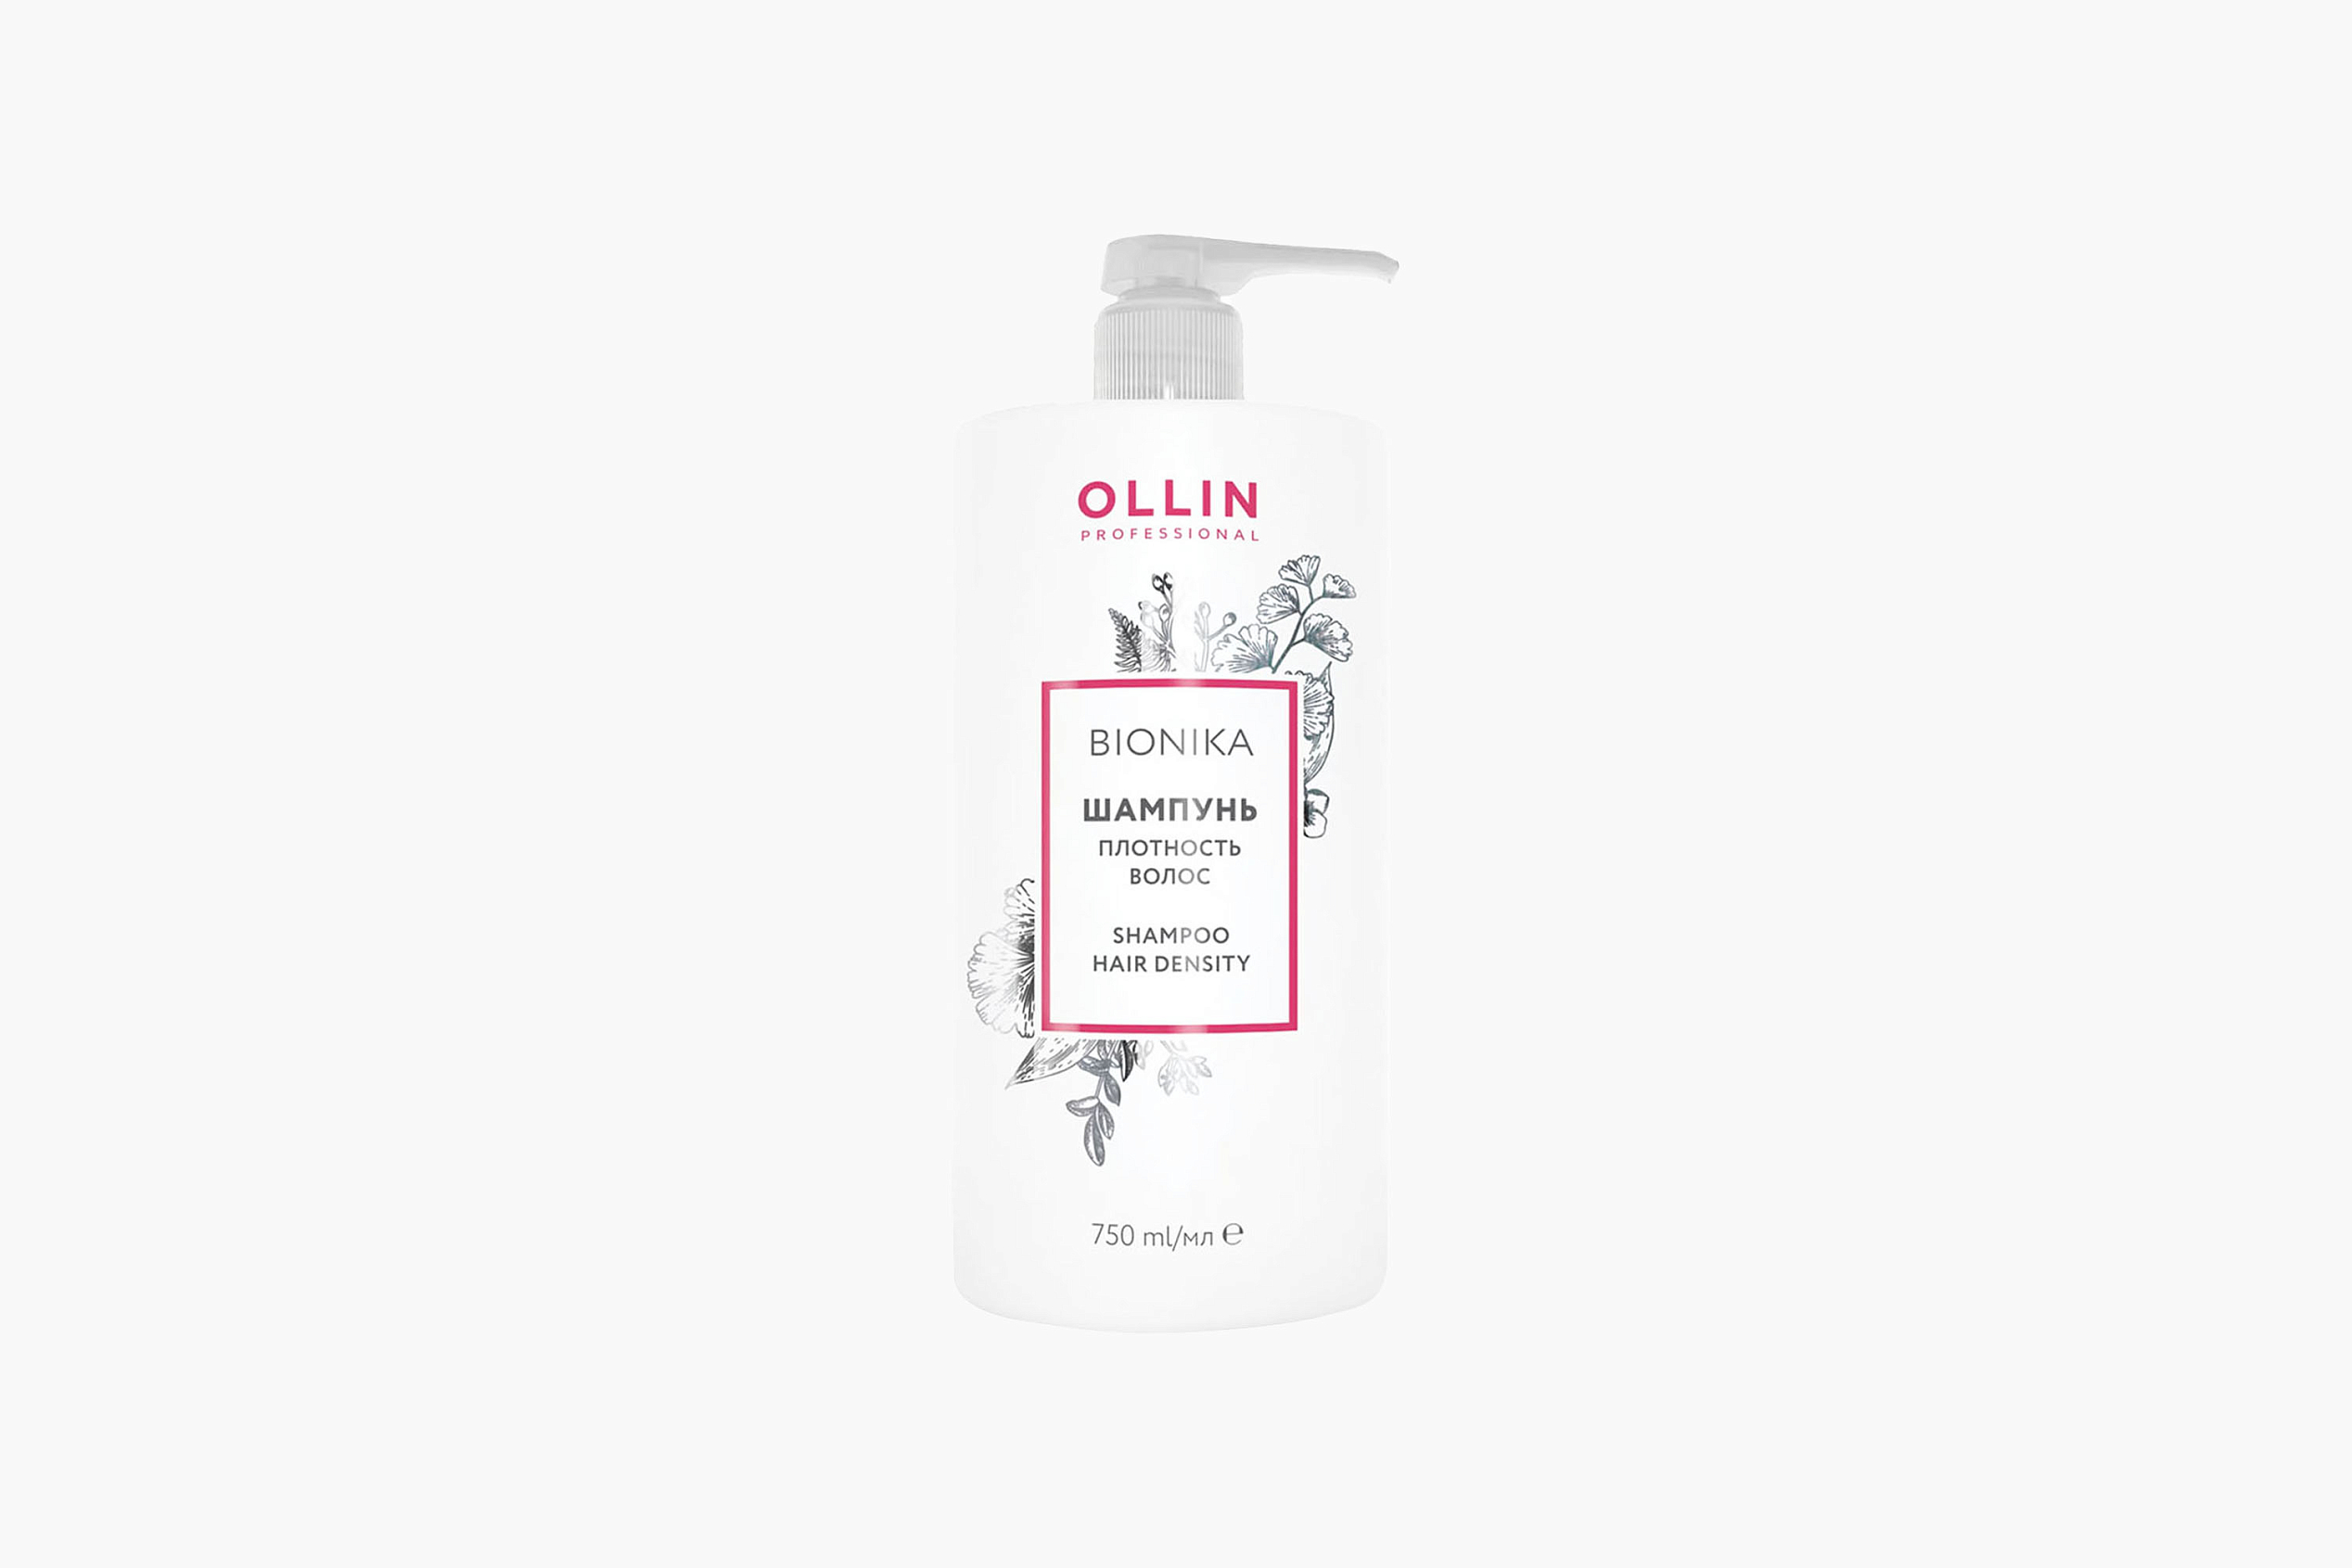 Ollin Professional Bionika Shampo Hair Density фото 1